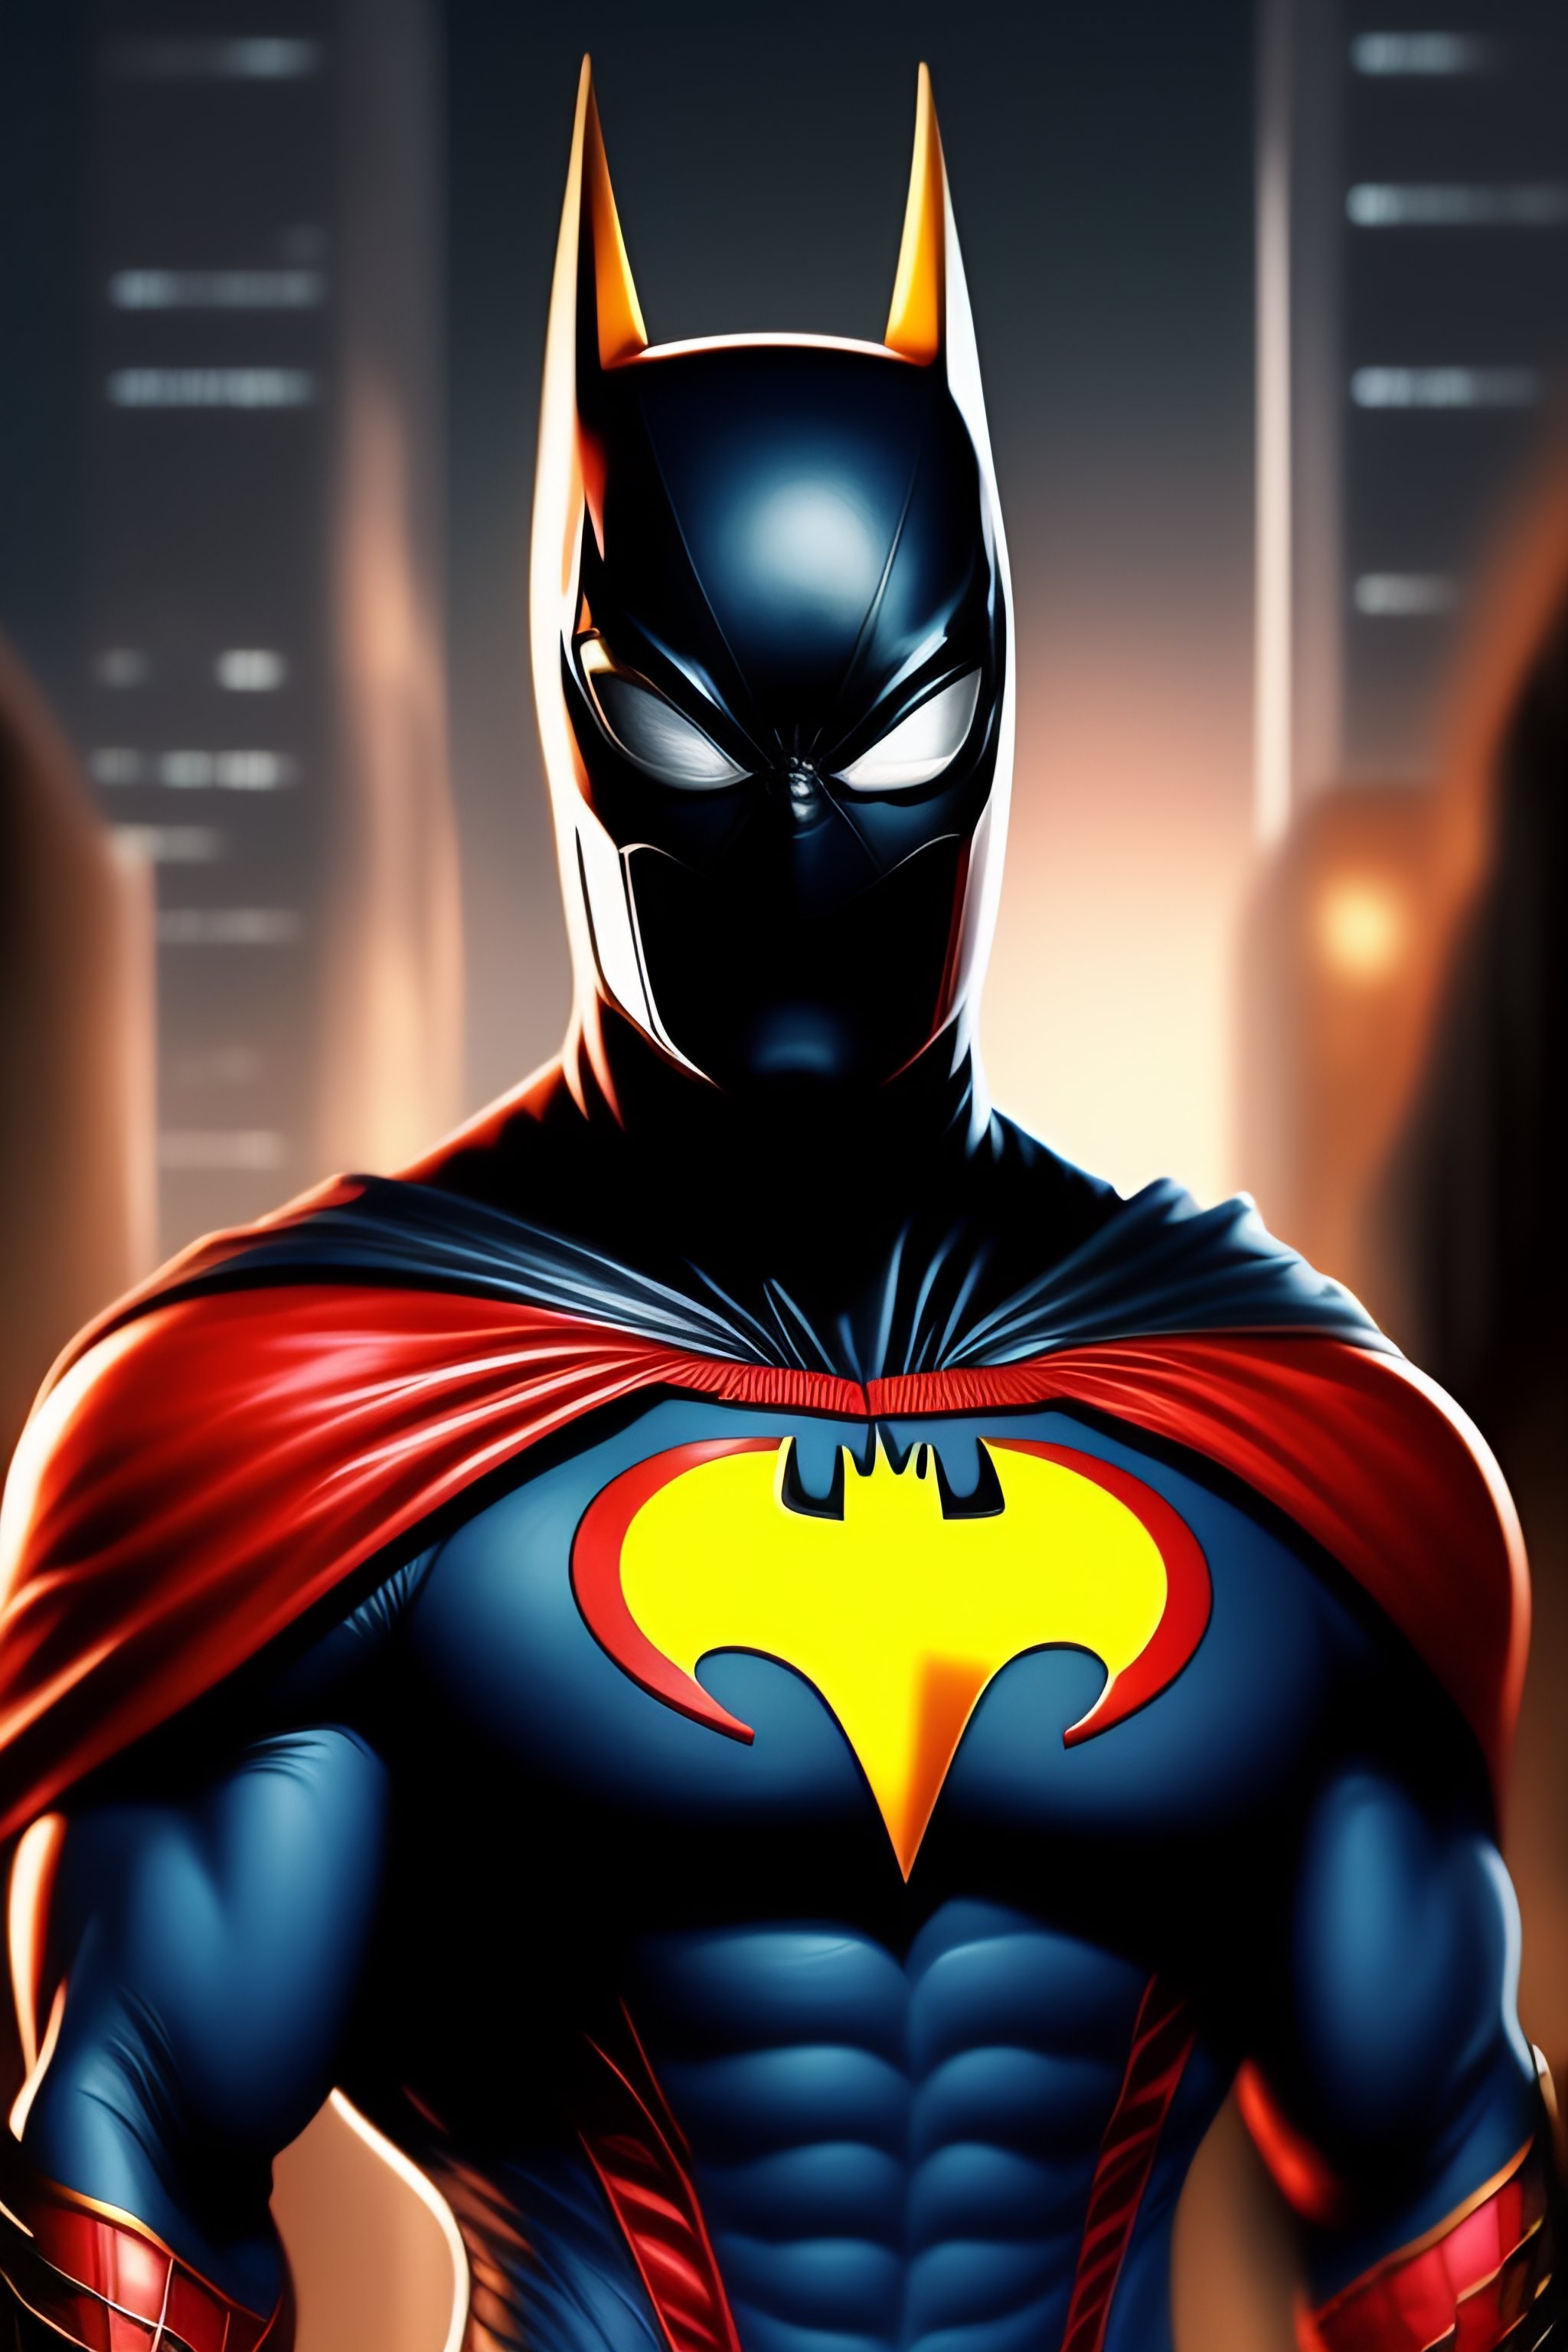 Lexica - Fusion of spiderman and batman, digital art